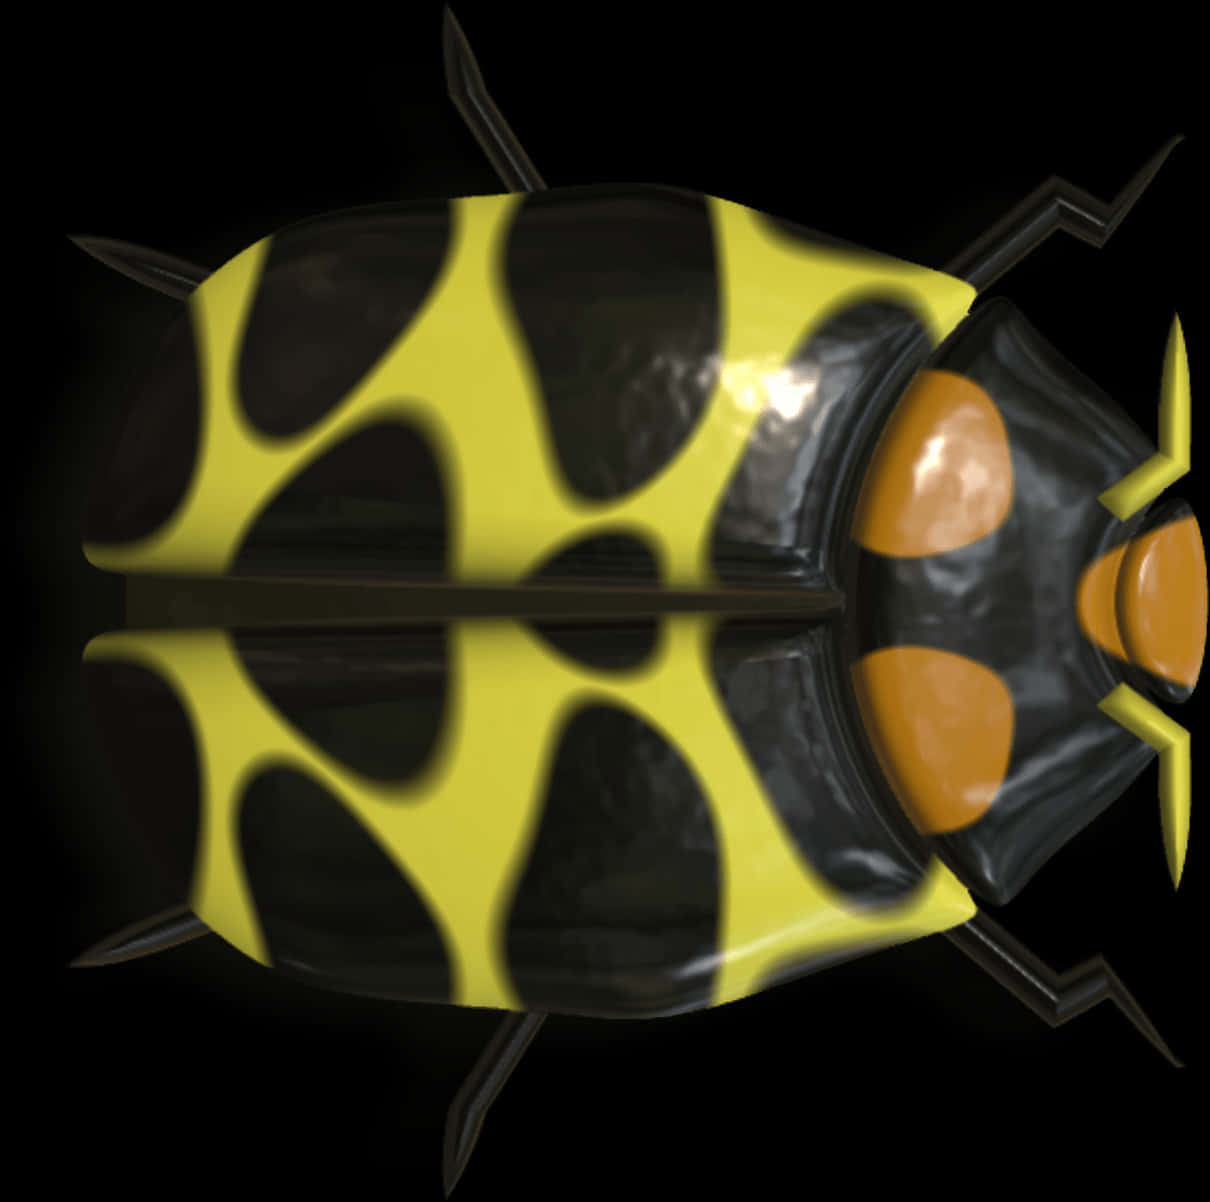 Abstract Ladybug Reflection PNG image